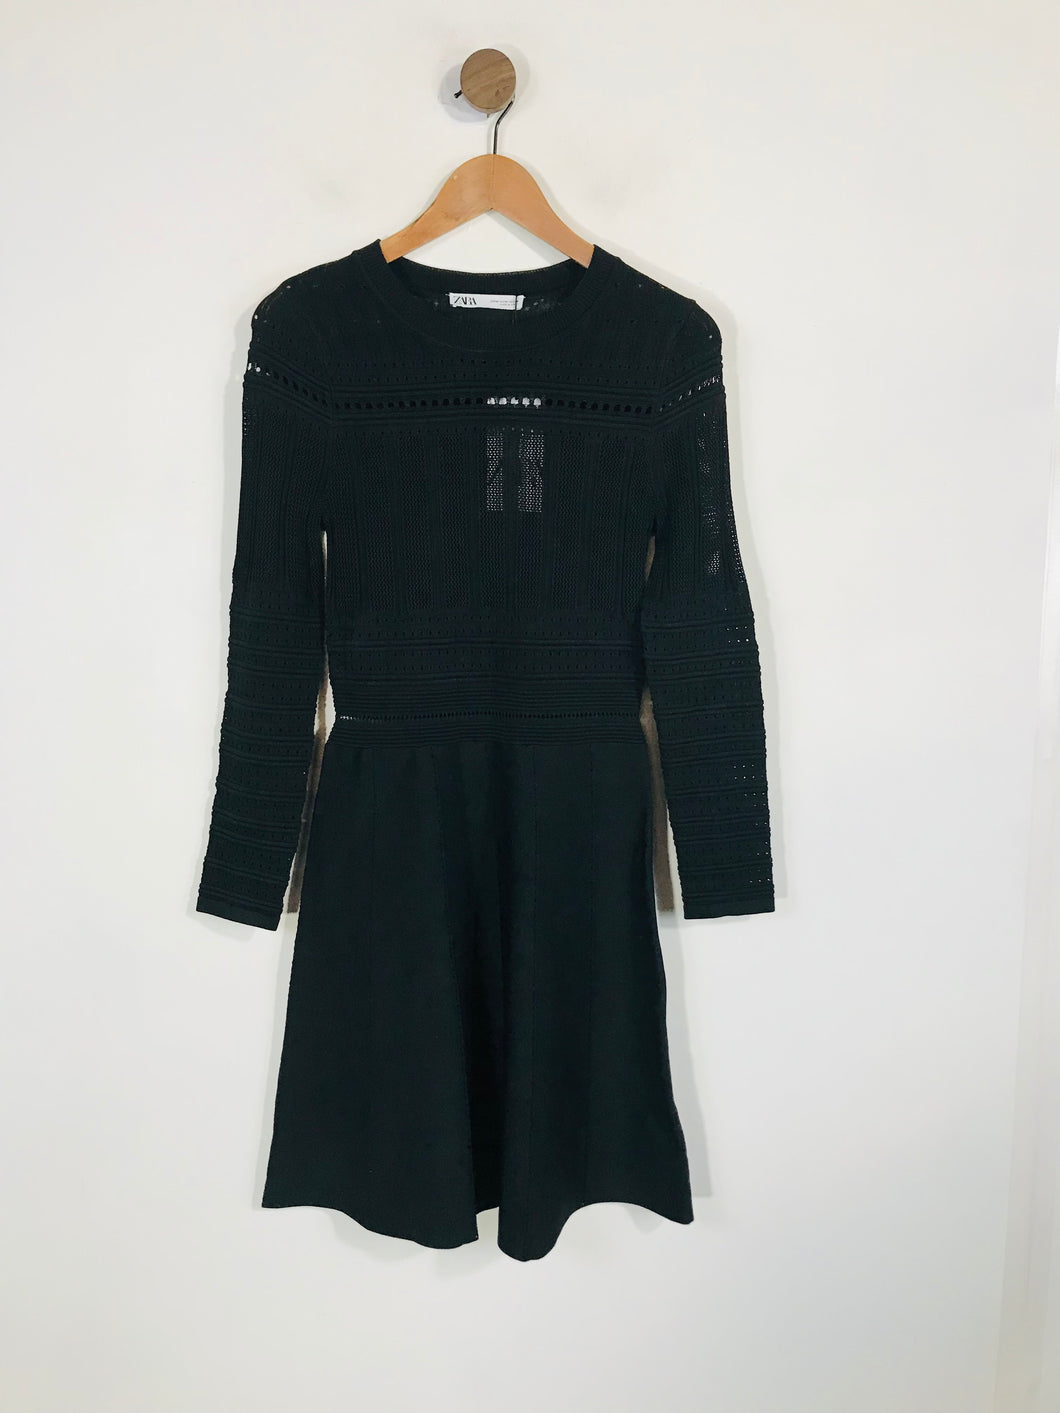 Zara Women's Lace A-Line Dress NWT | M UK10-12 | Black